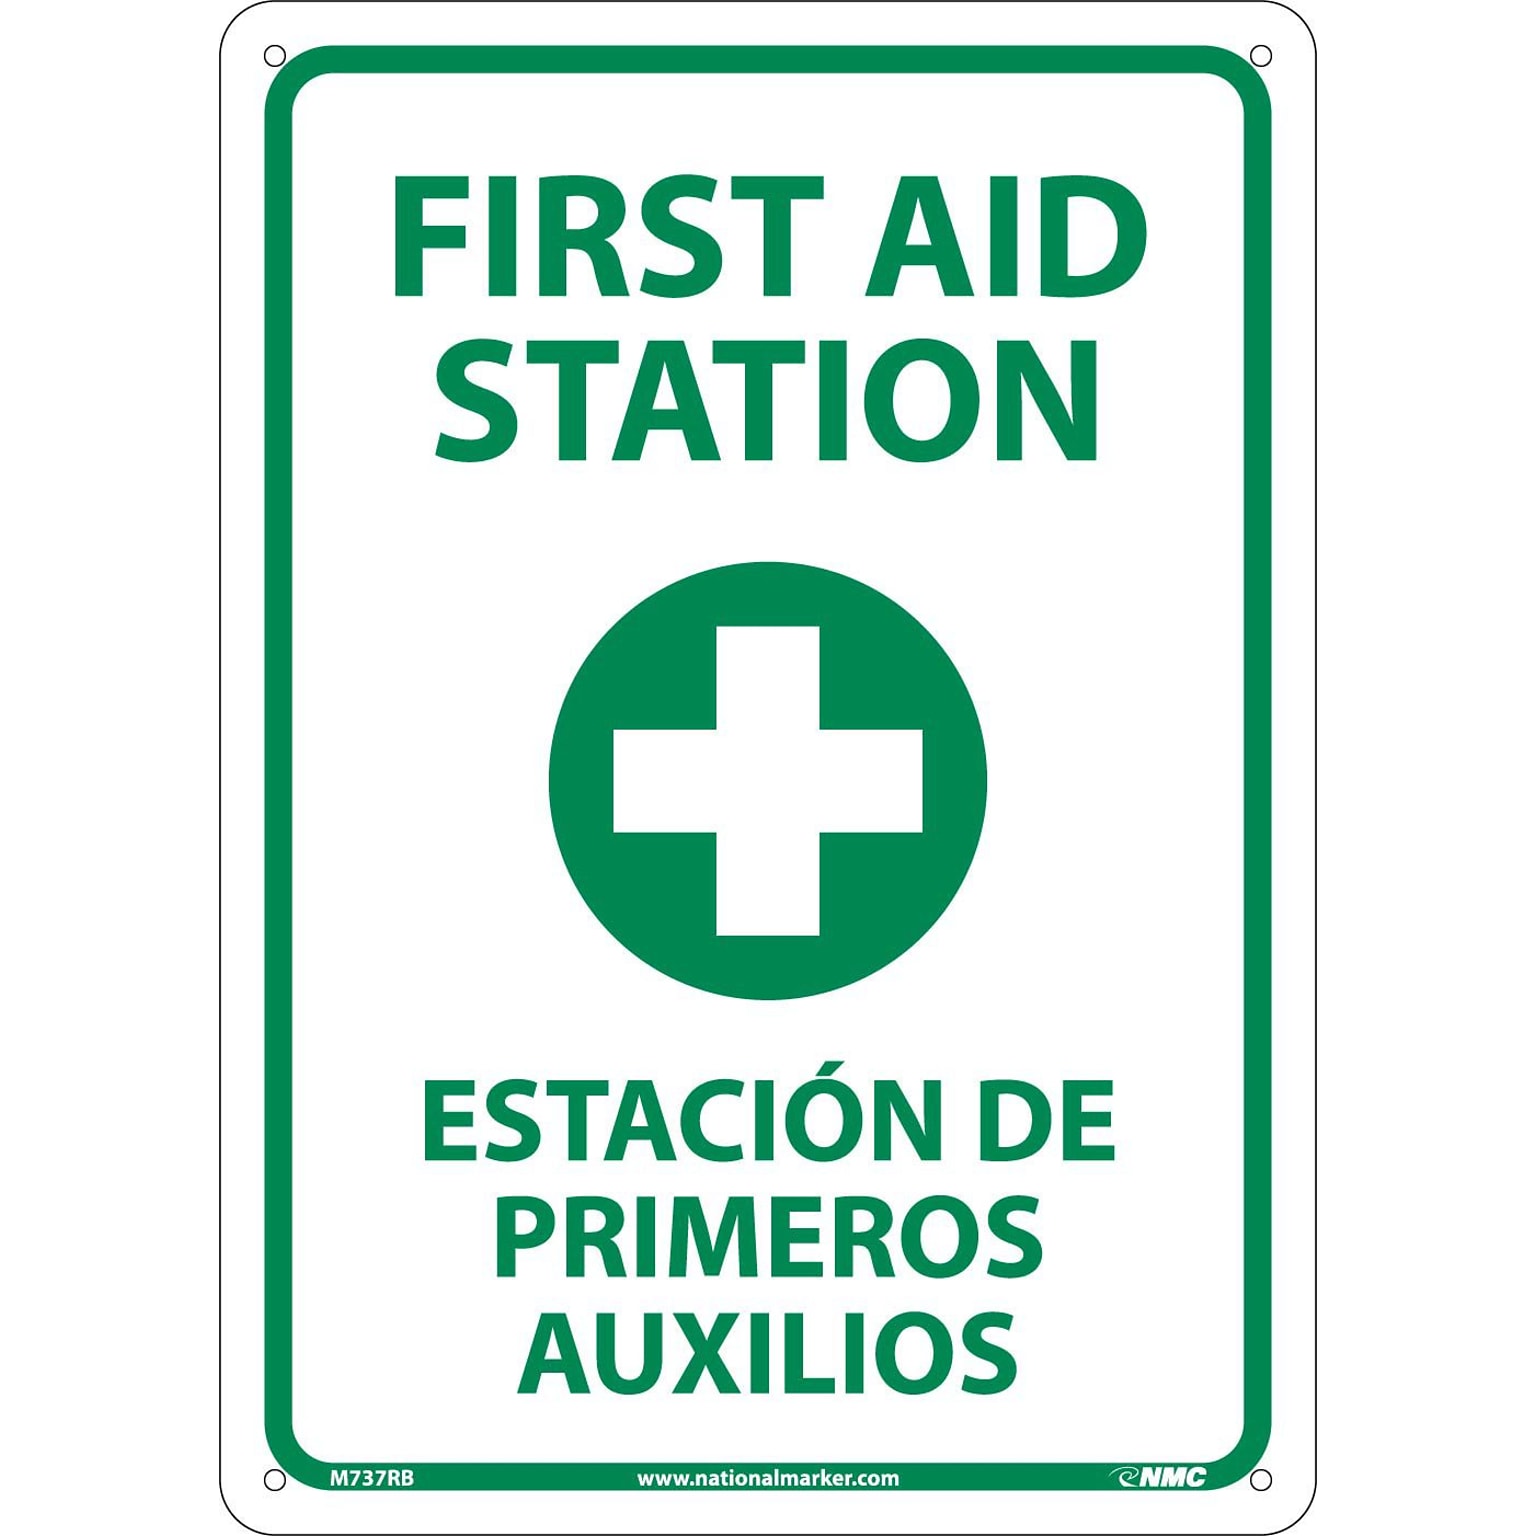 Notice Signs; First Aid Station (Graphic), Bilingual, 14X10, Rigid Plastic